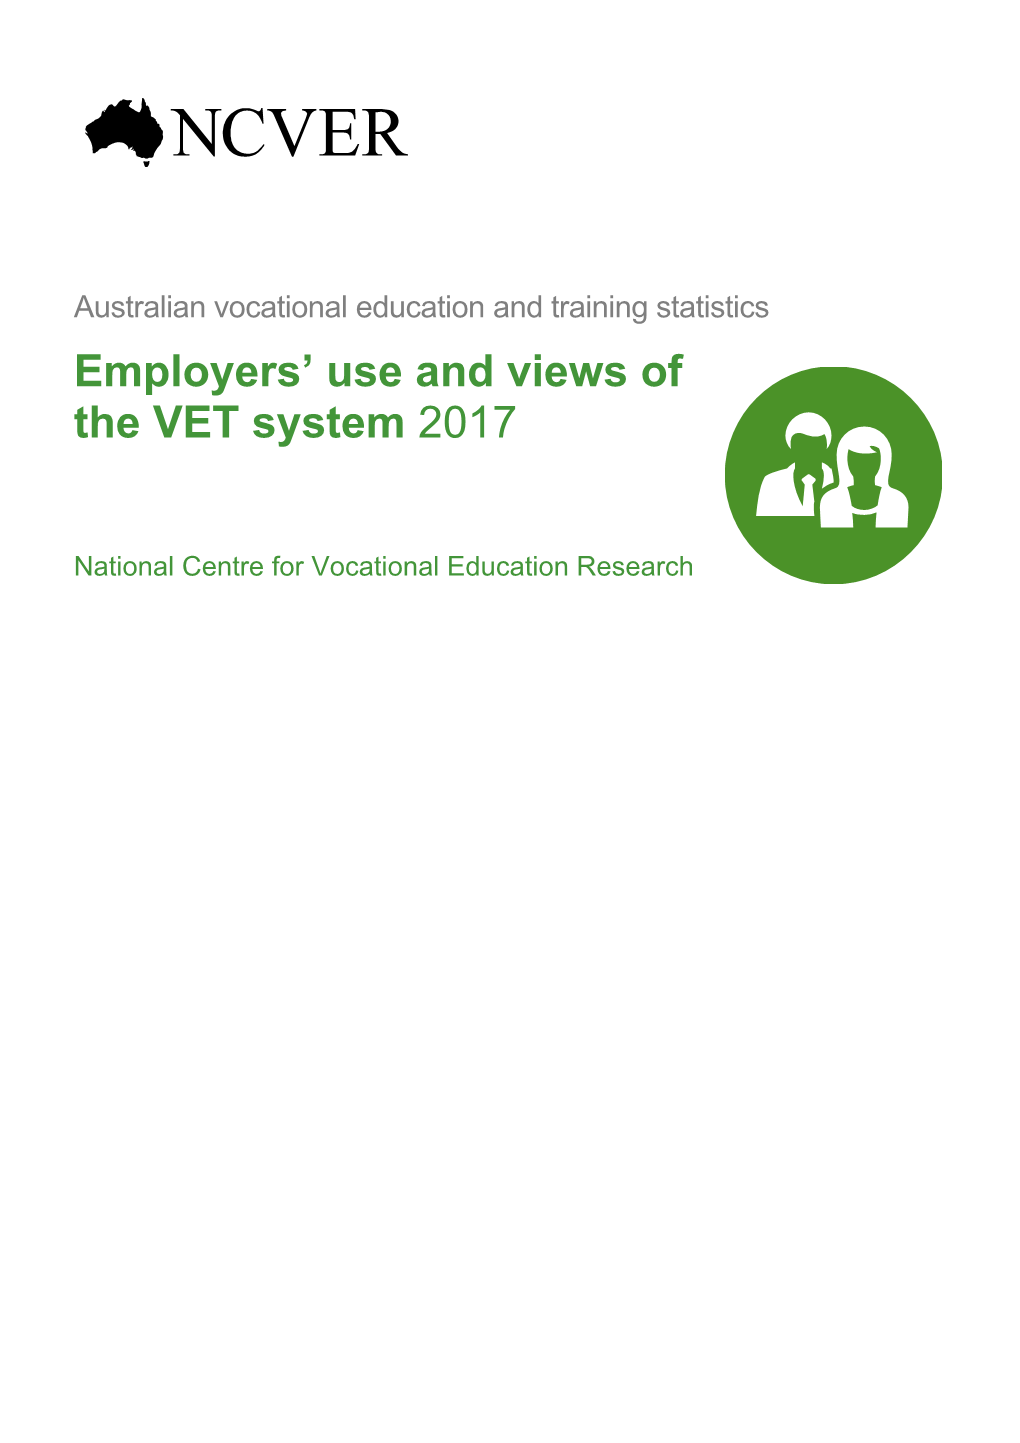 Australian Vocational Education and Training Statistics